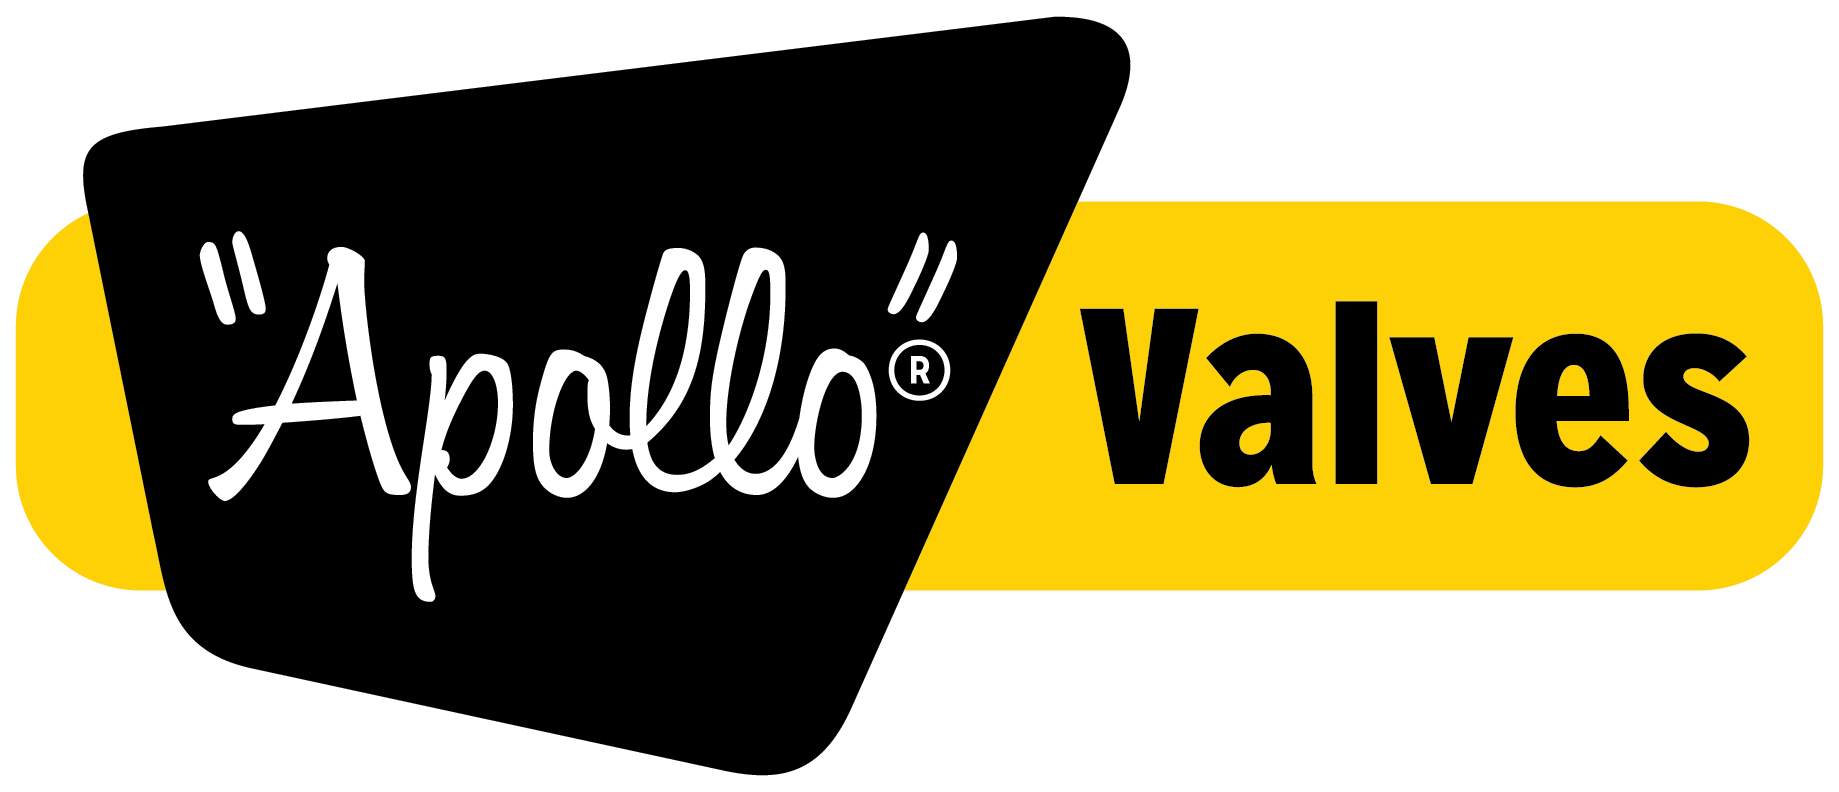 Apollo Valves Logo